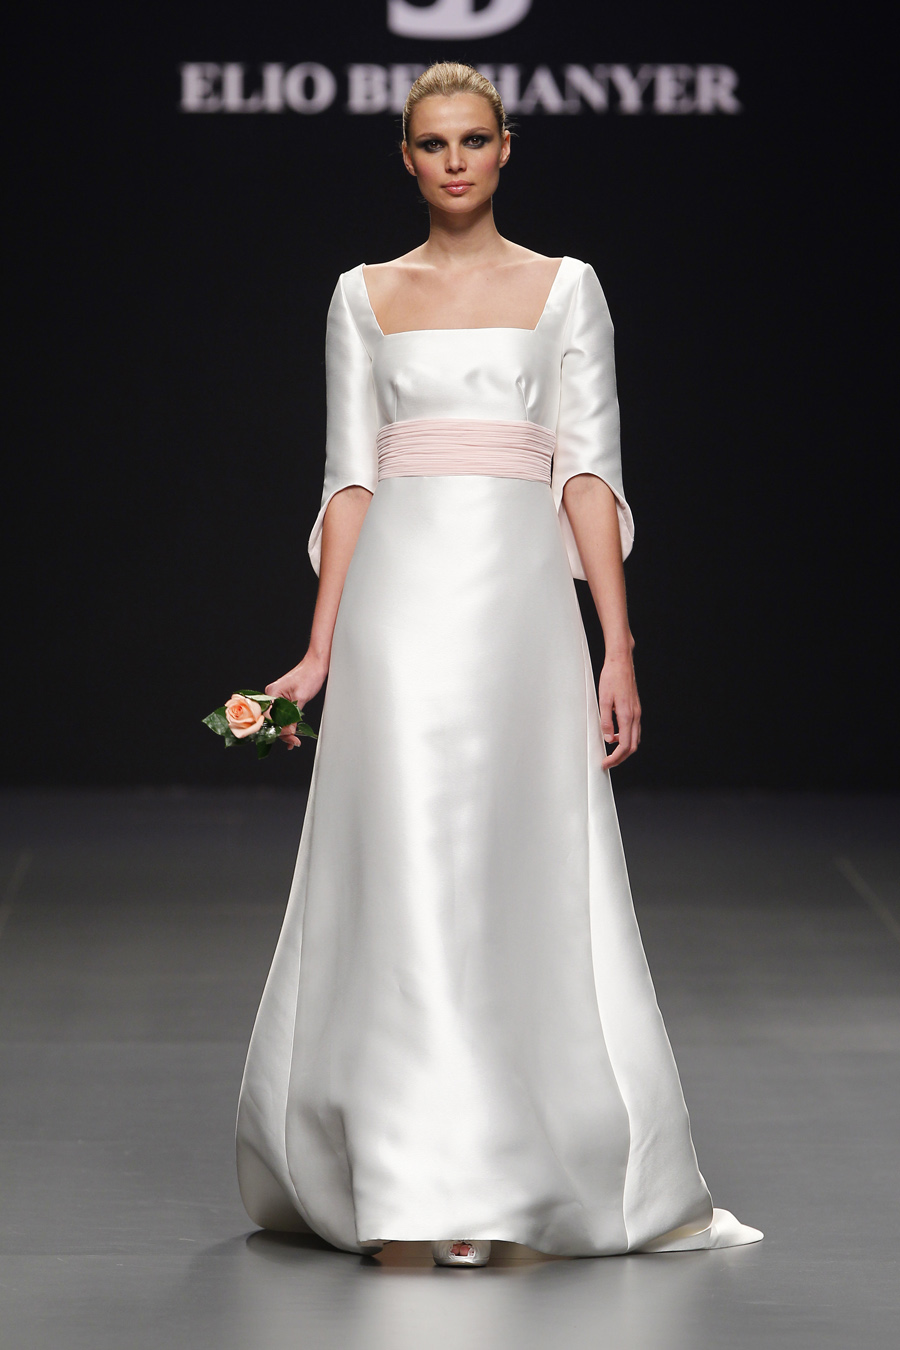 Empire Waist Satin Wedding Dress by Elio Berhanyer Bridal